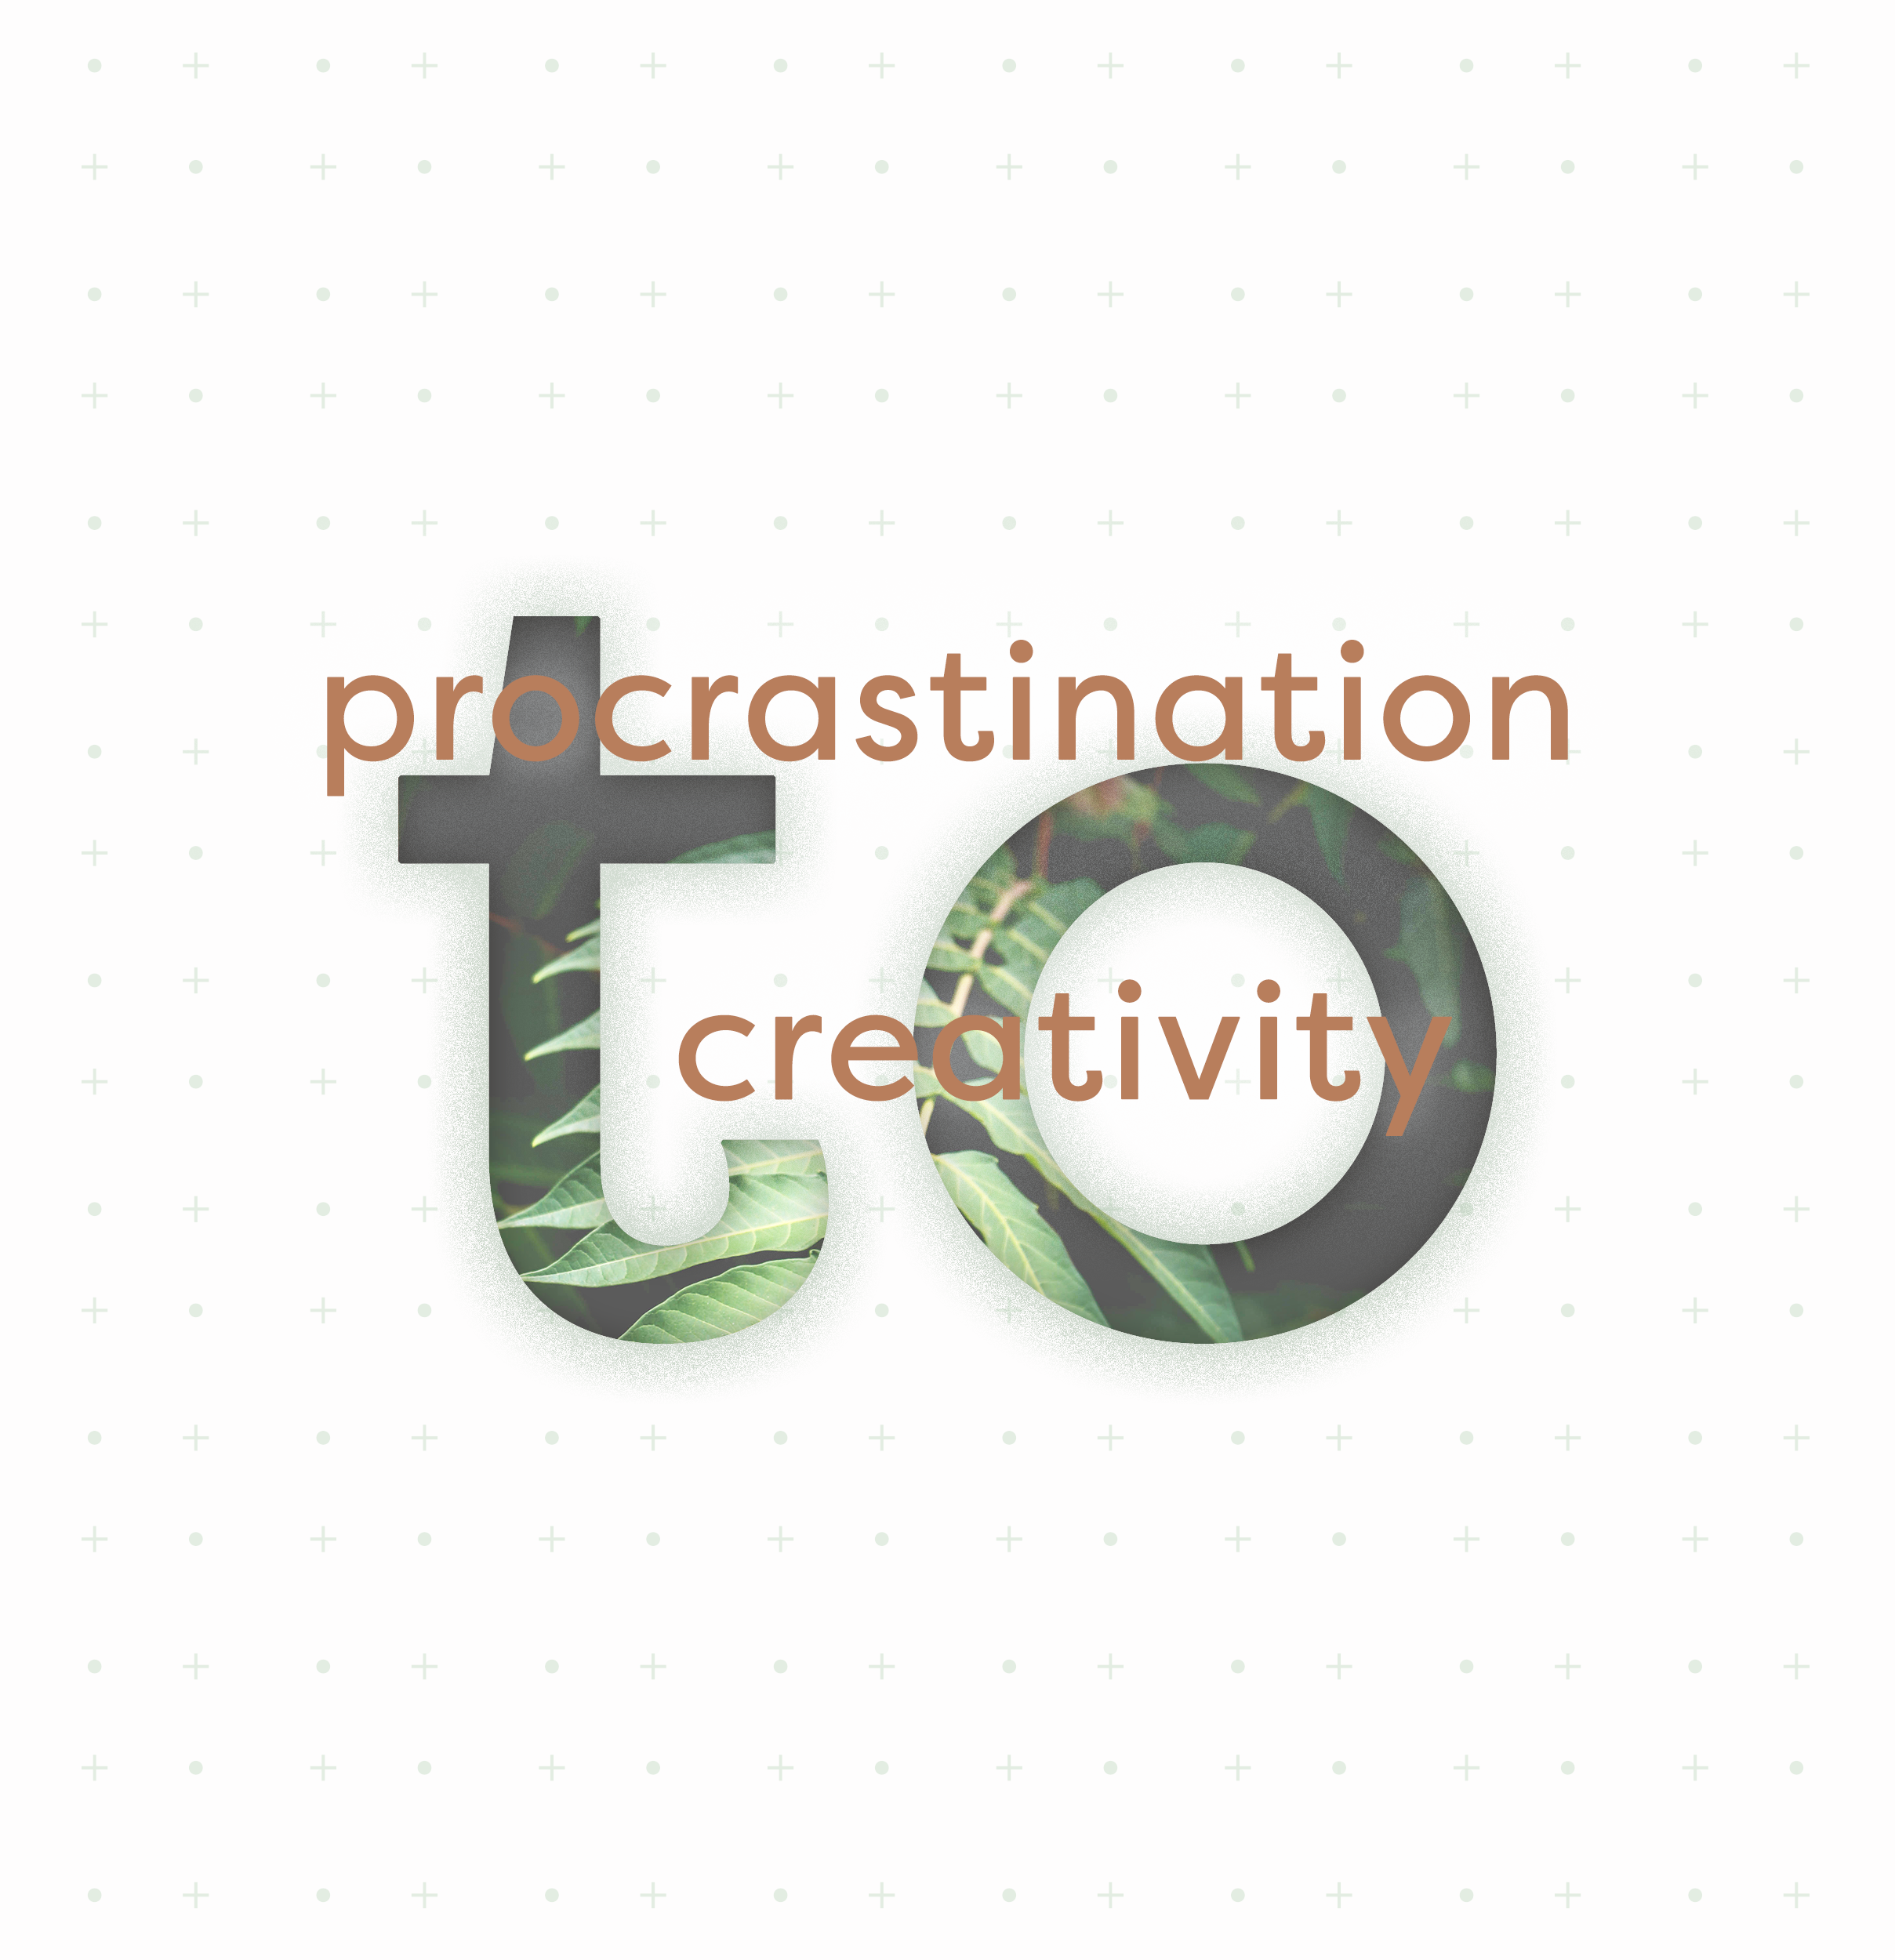 designed image reading "Procrastination to Creativity" for blog